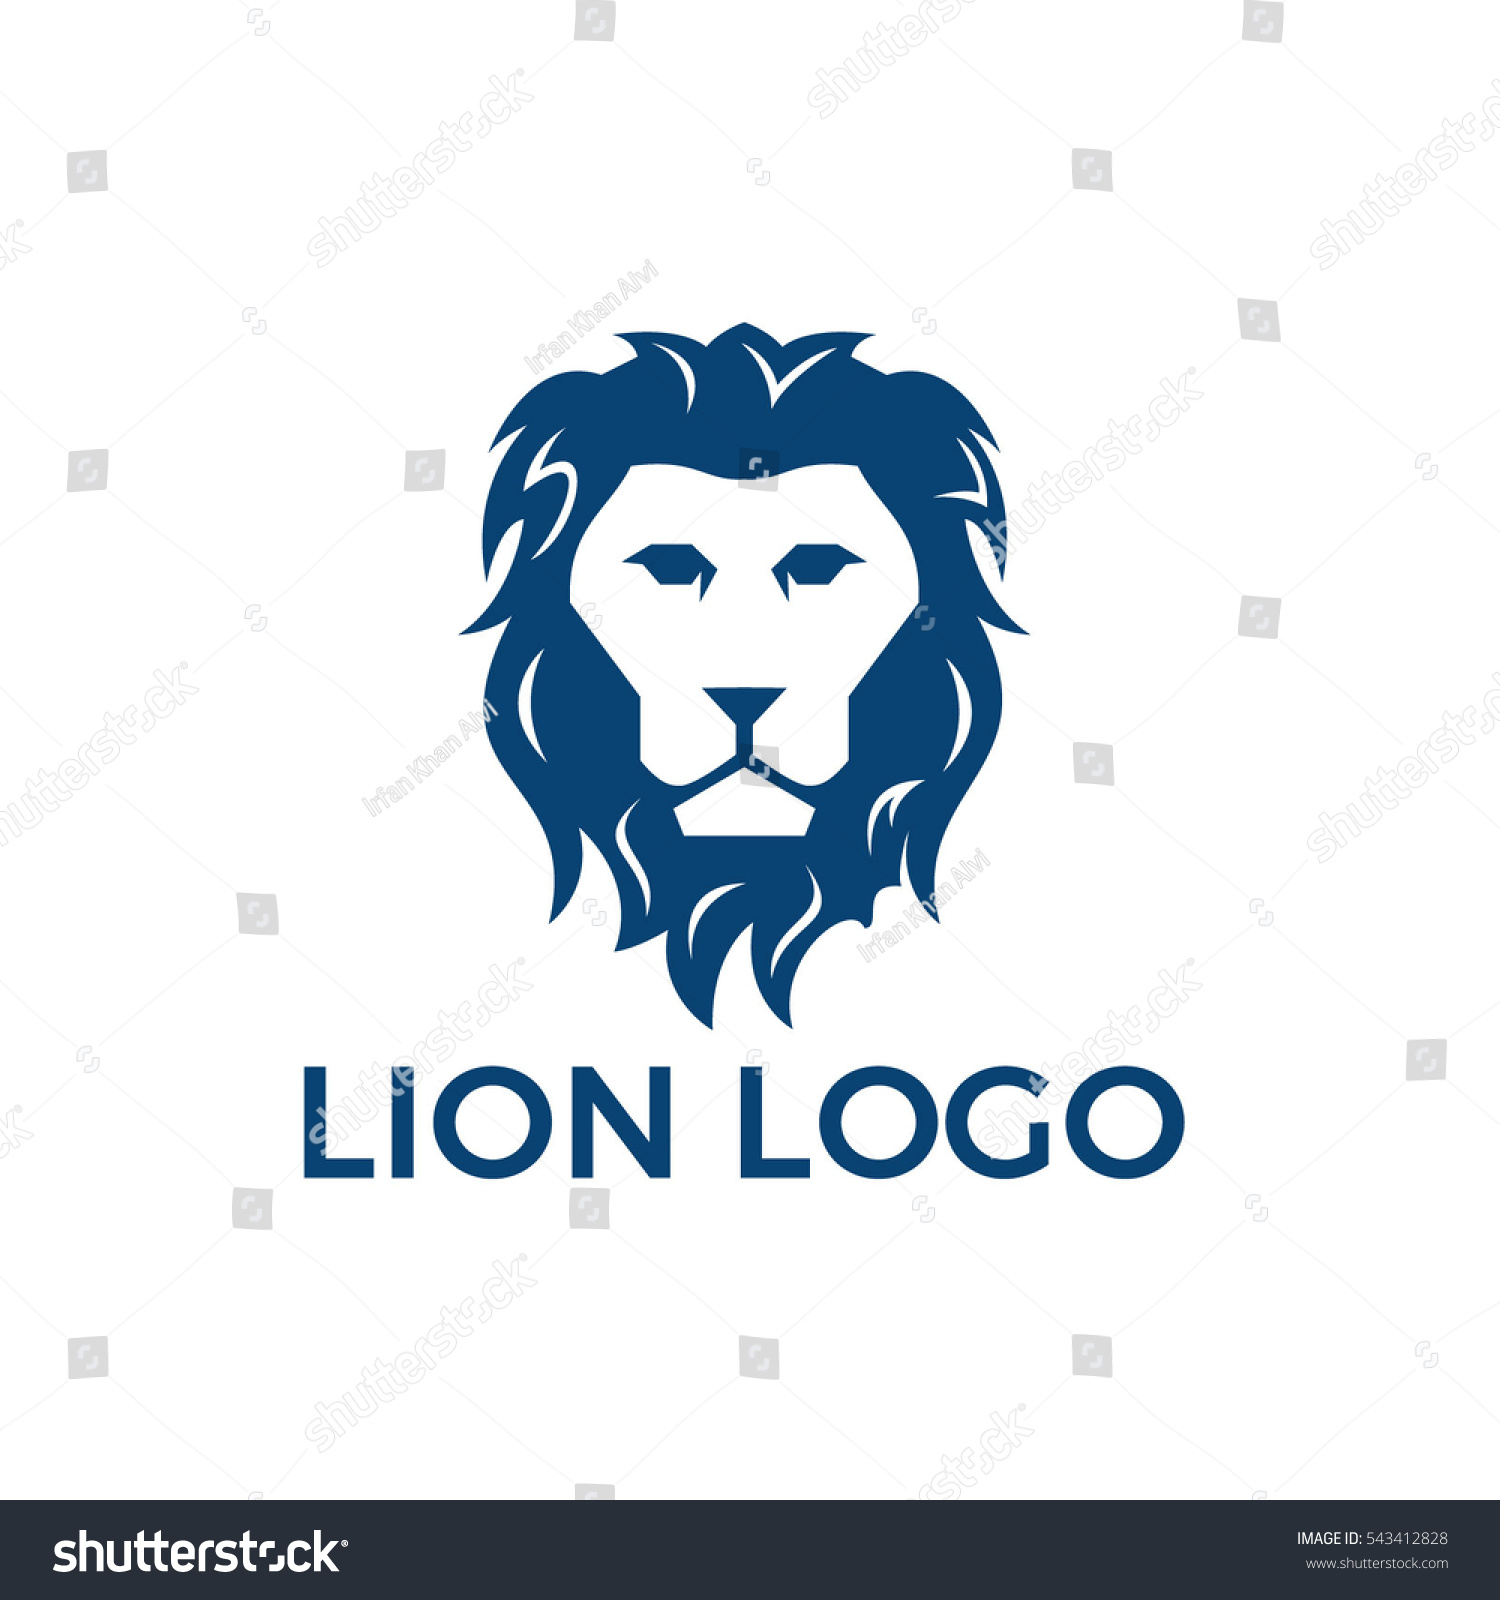 Lion Head Logo Or Icon Vector Design. - 543412828 : Shutterstock